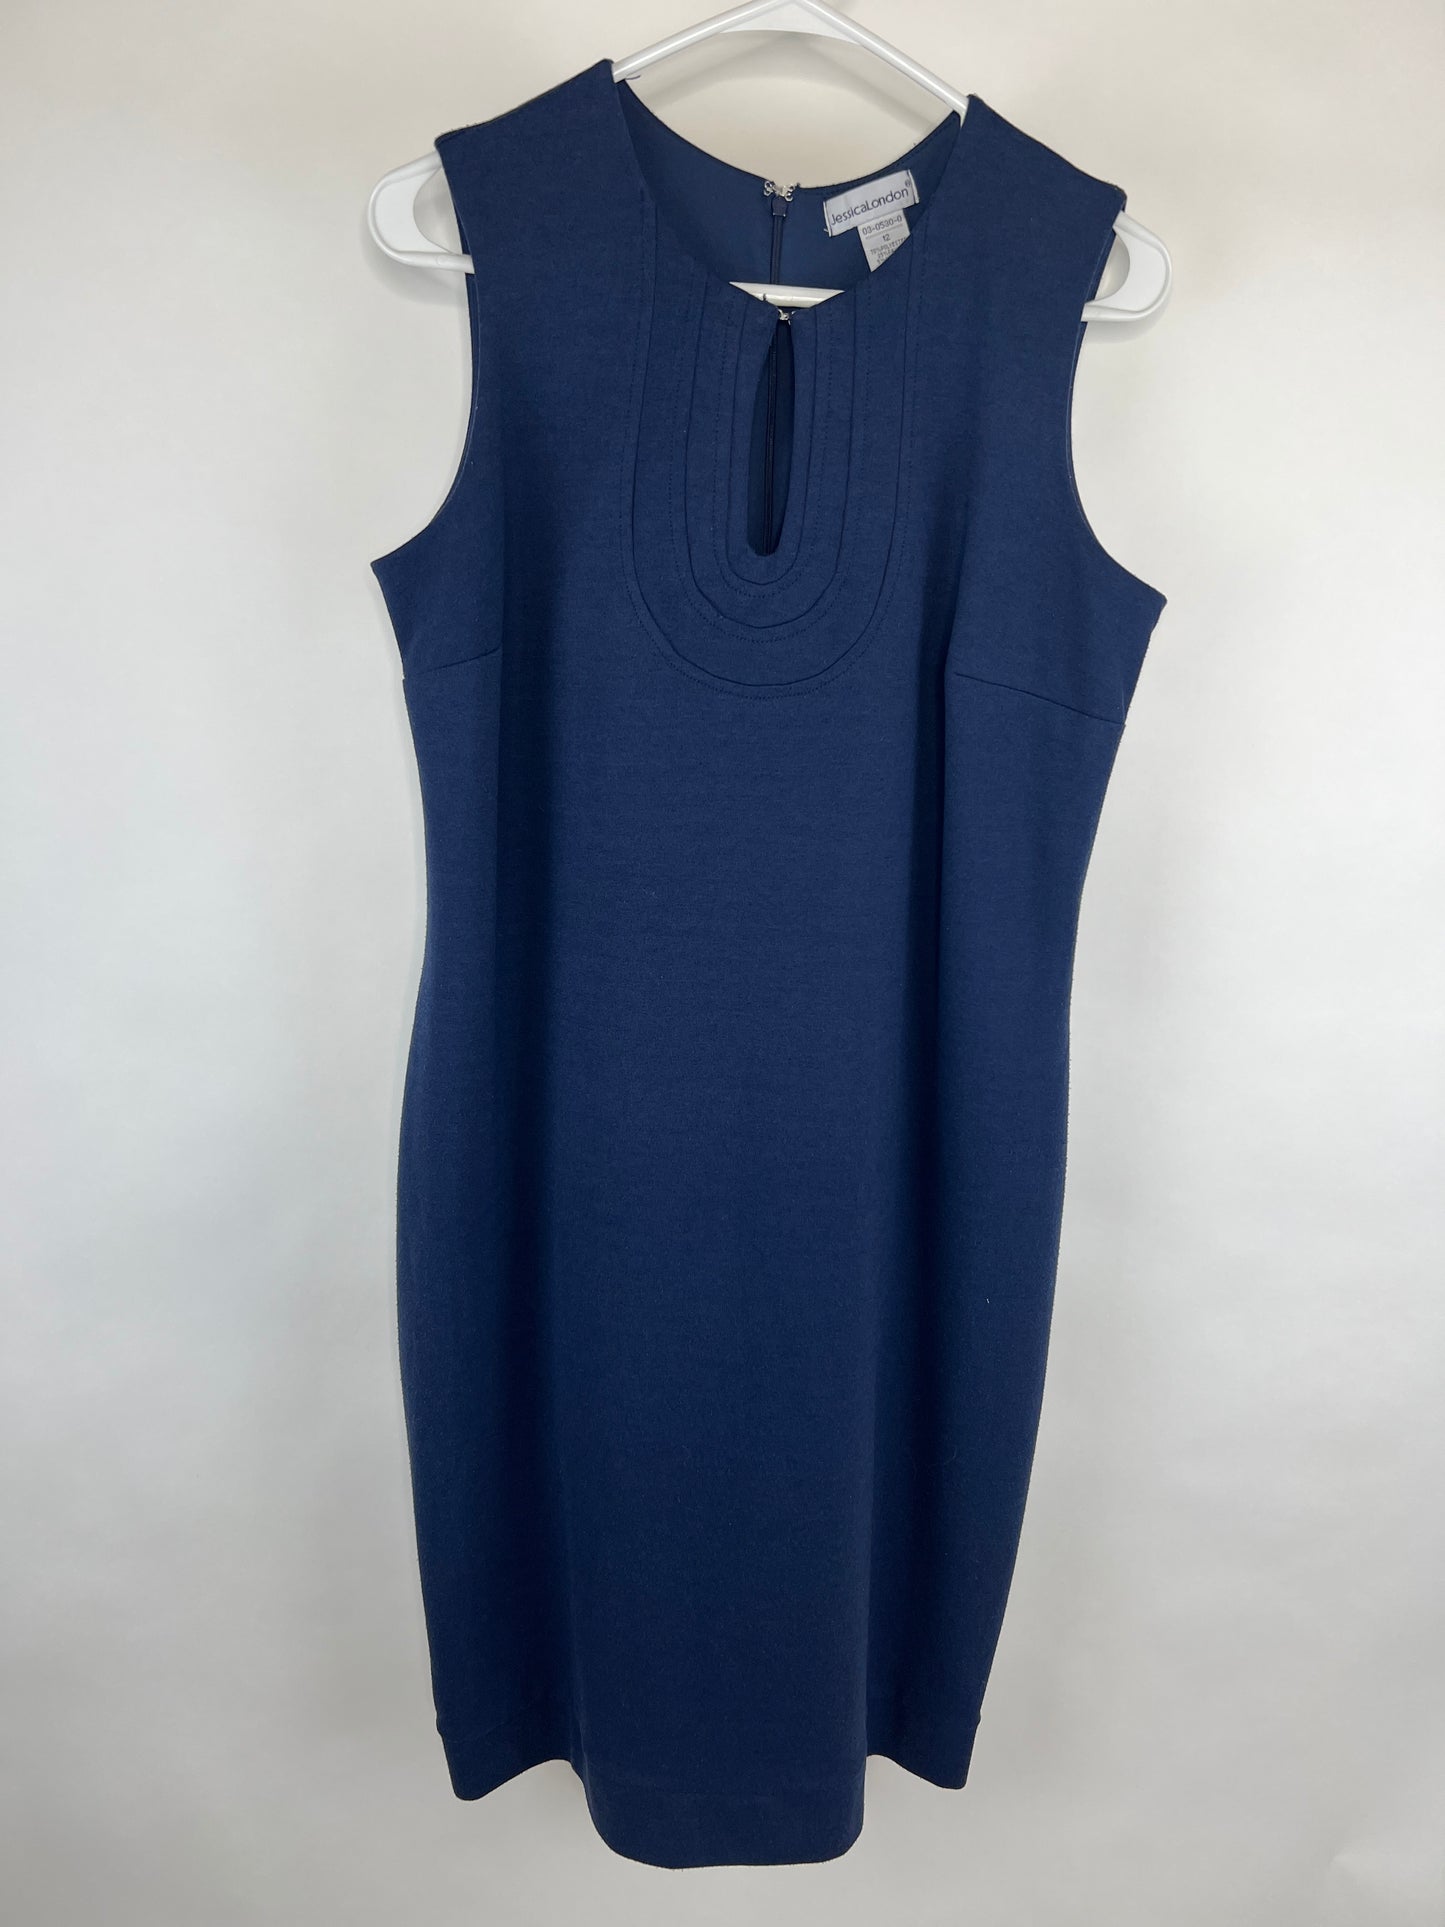 Jessica London Navy Blue Jewel Neckline Keyhole Midi Dress - L (12)